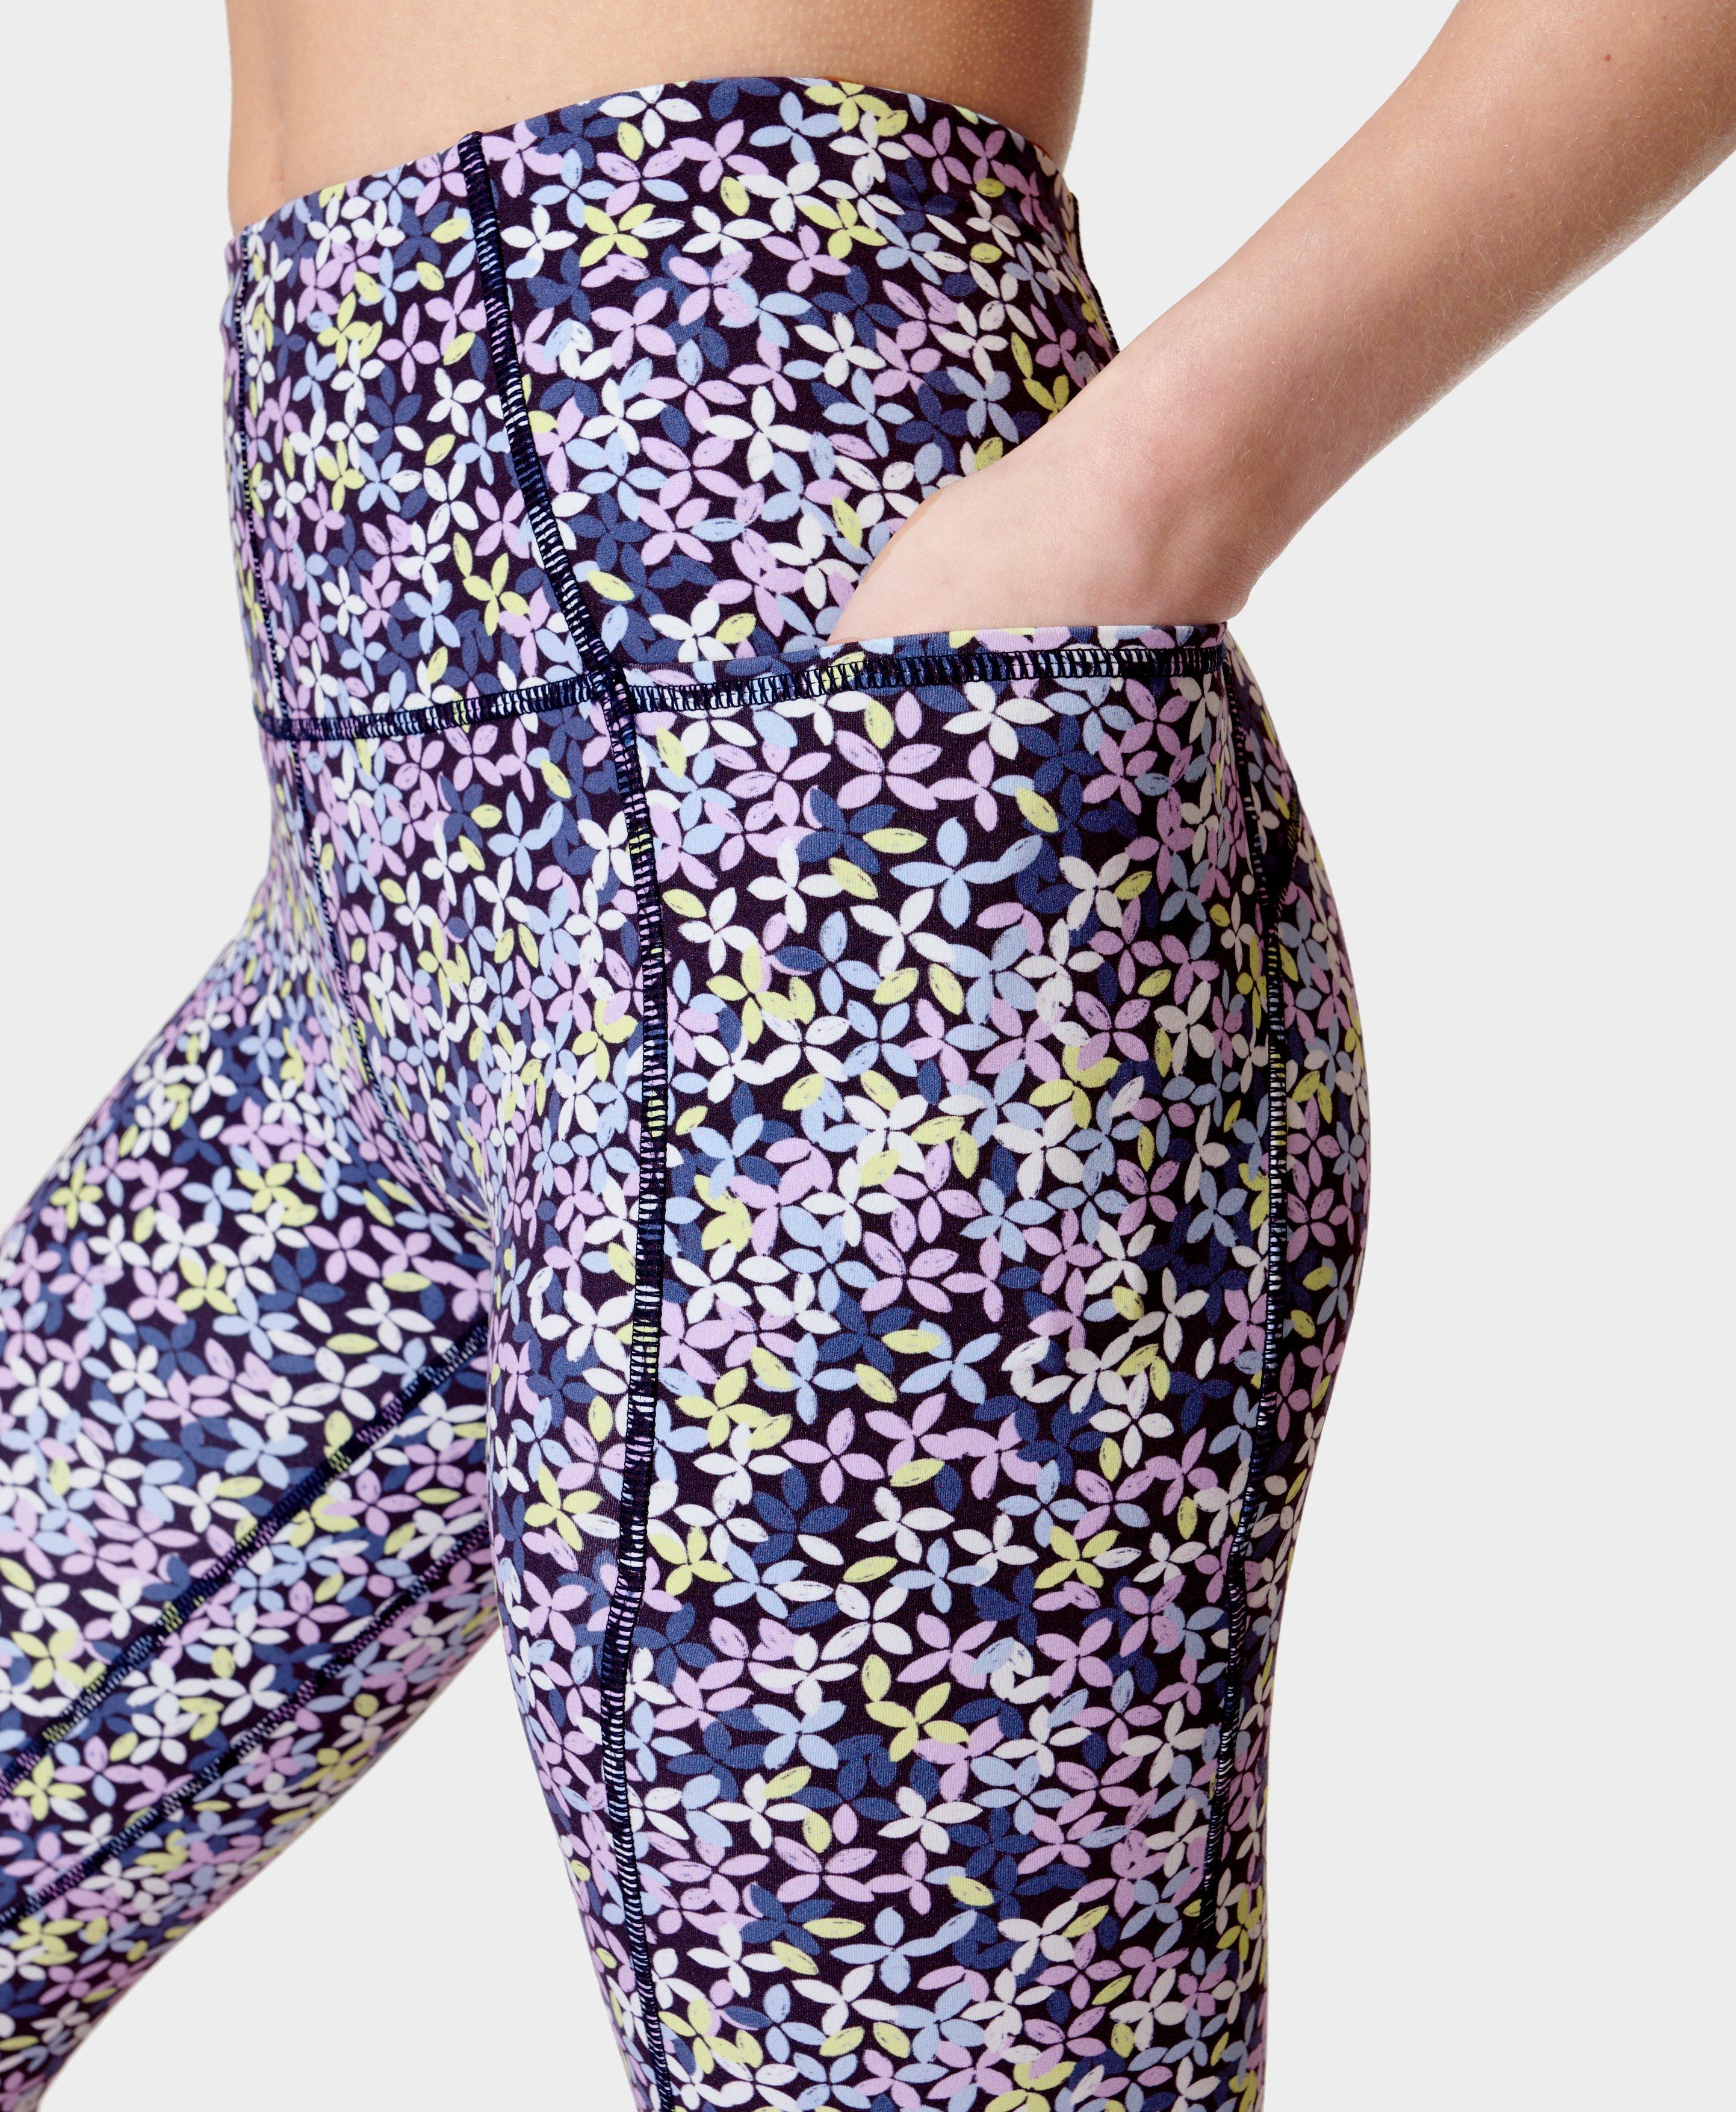  ENVY BODY SHOP Women's Spandex Leggings S Floral Print